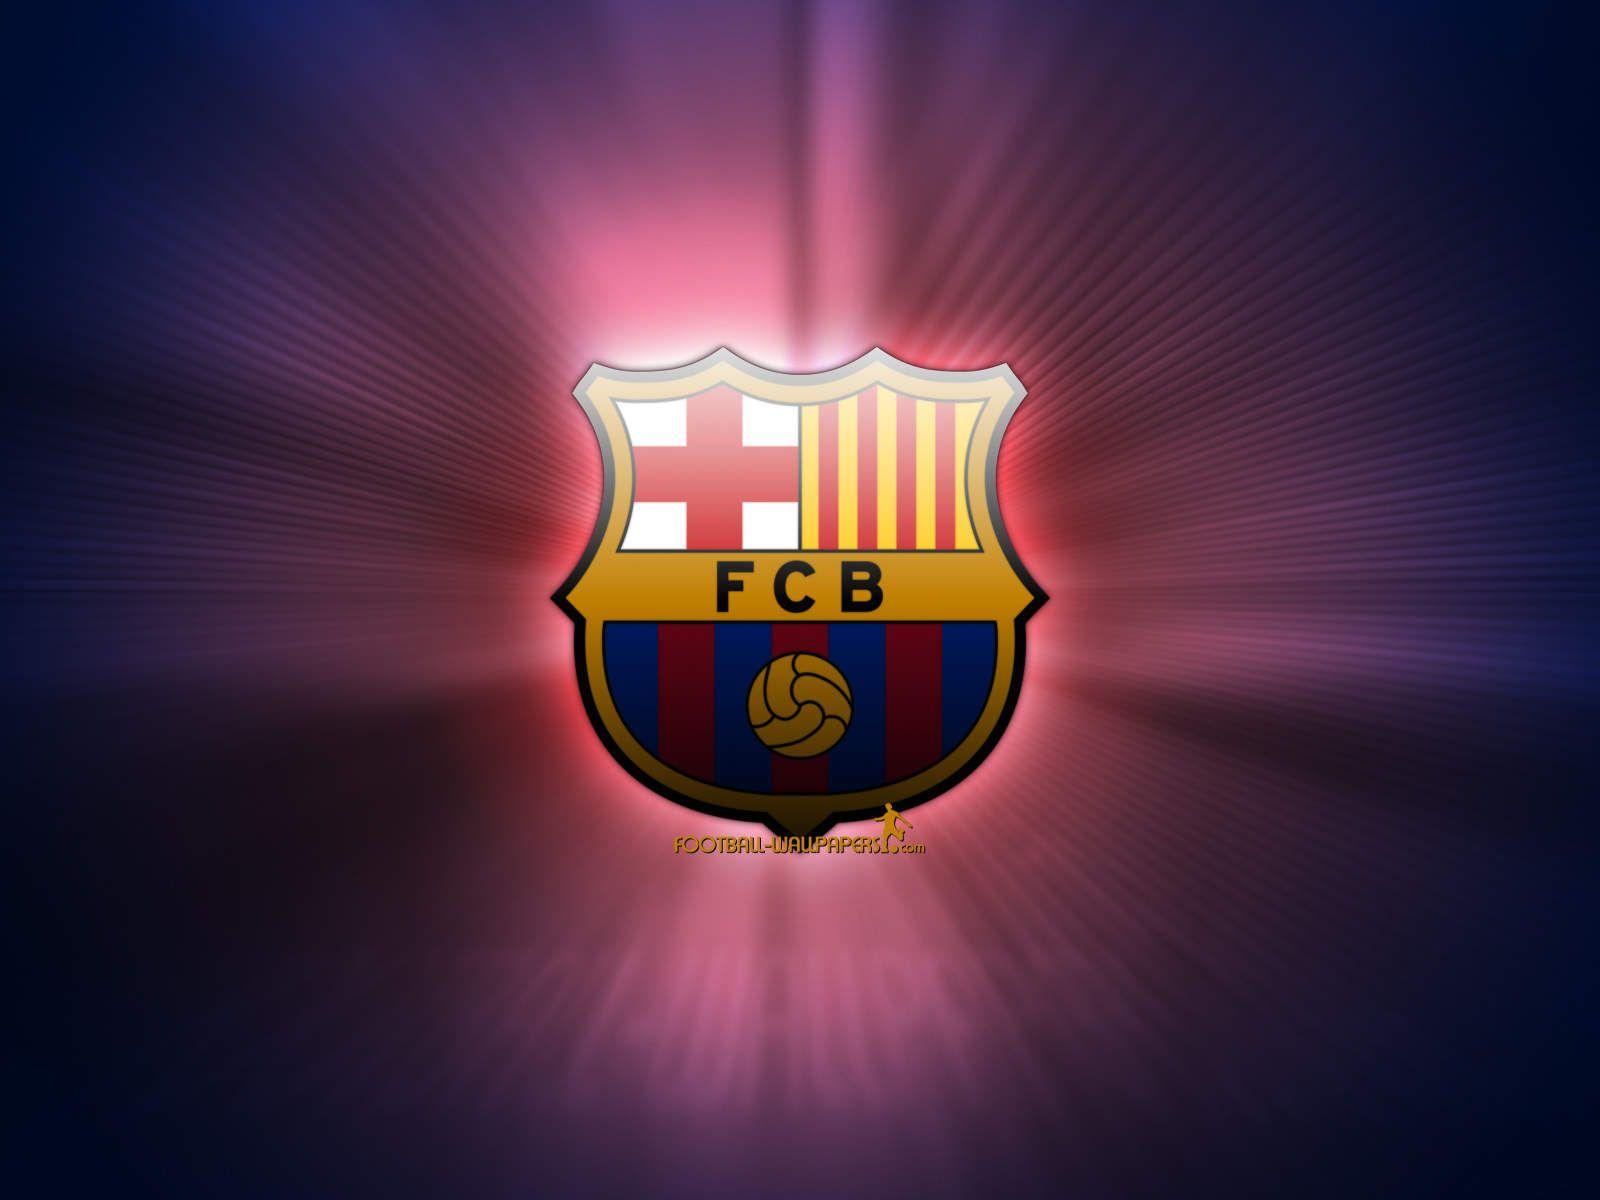 Fc Barcelona Logo 2015 HD Wallpaper, Background Image